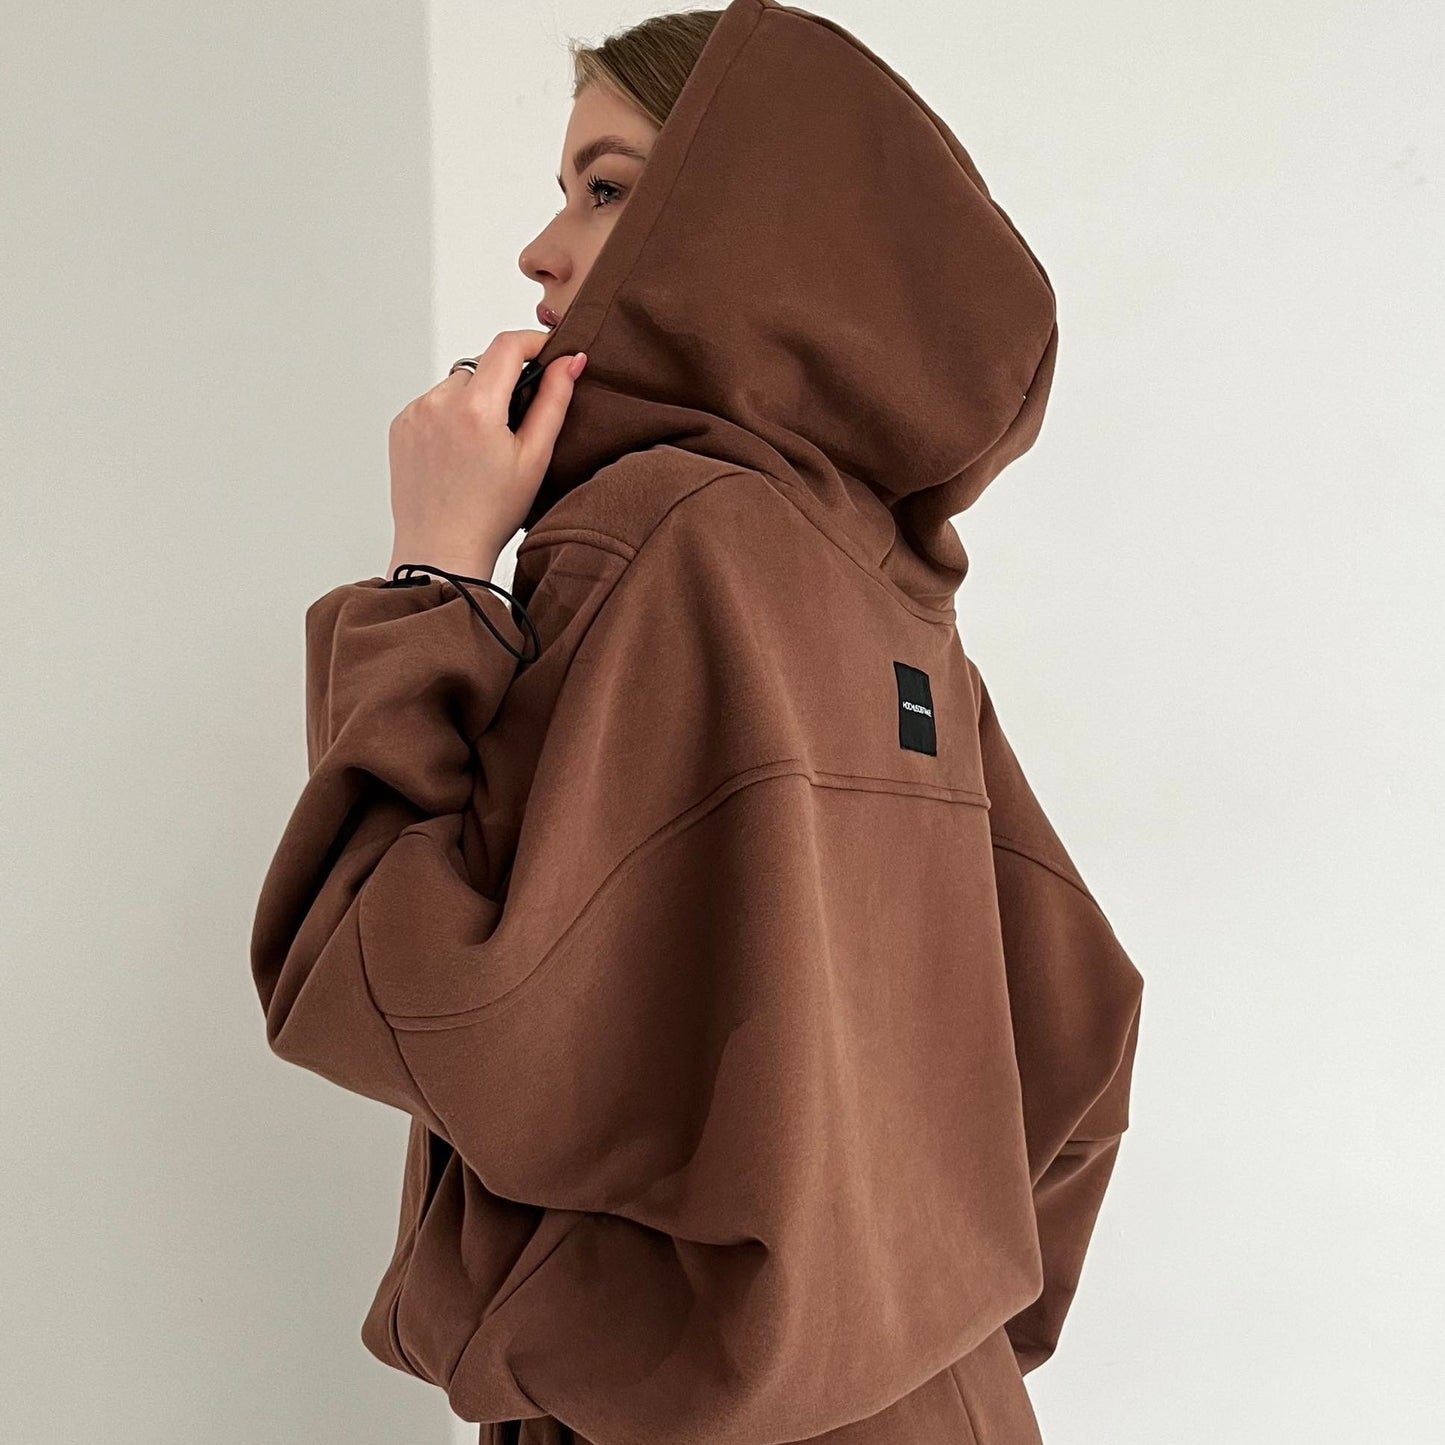 Cocoa hoodie